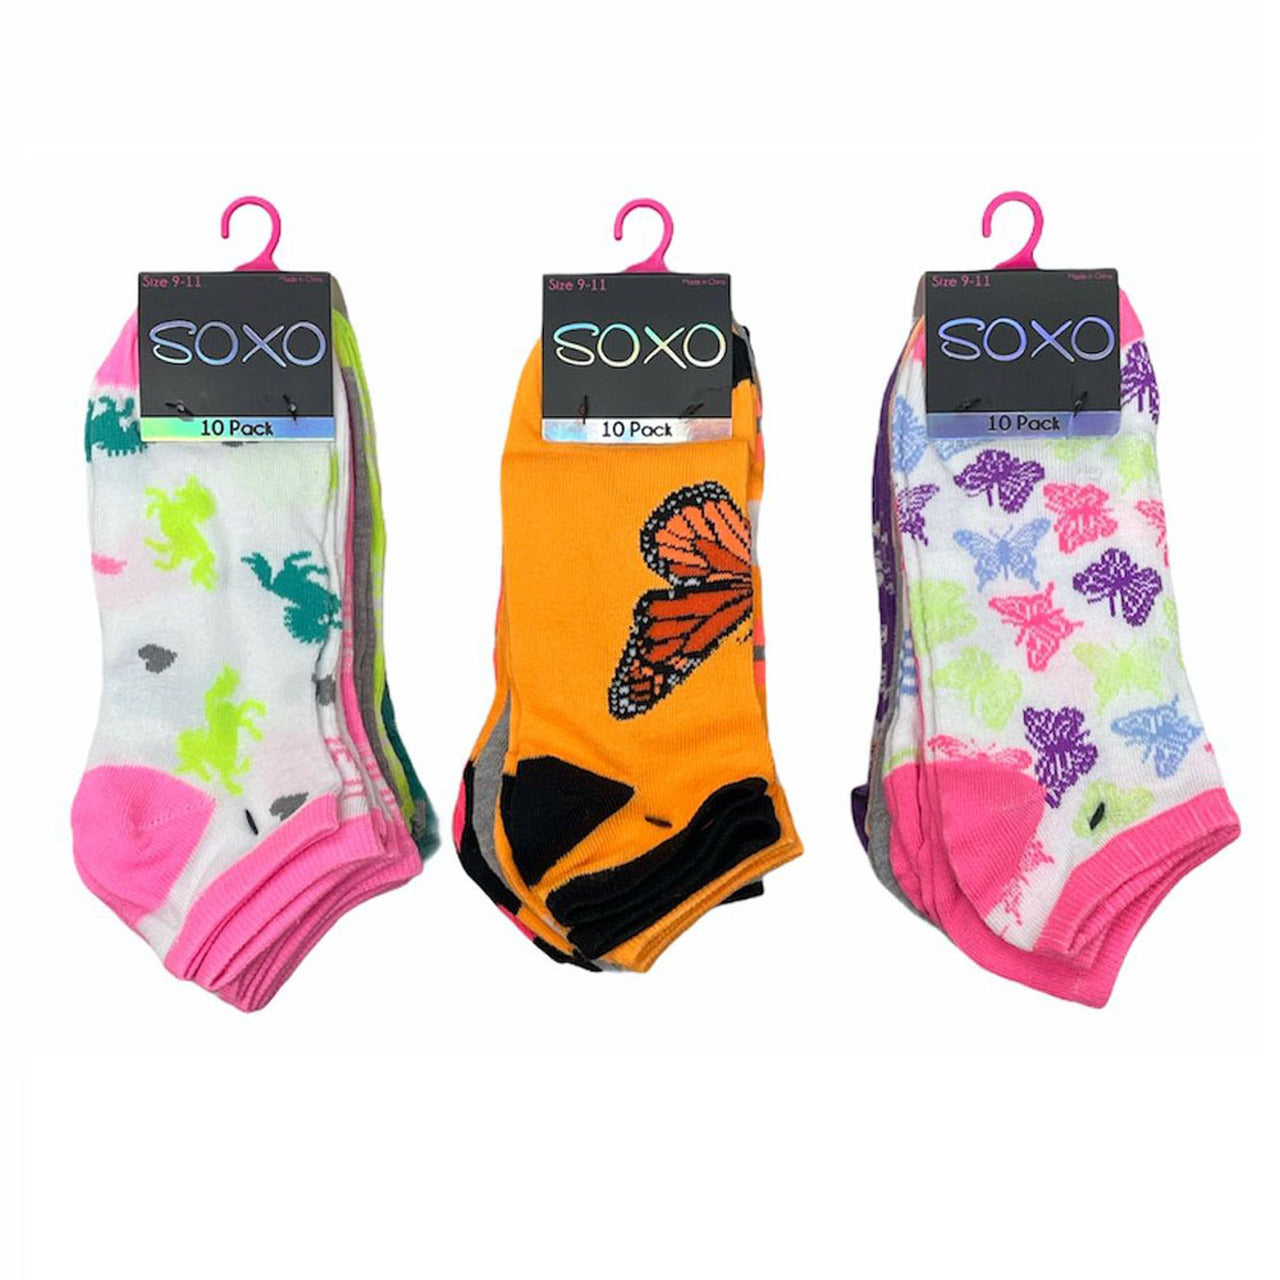 30 Pairs Women's Assorted Low Cut Socks